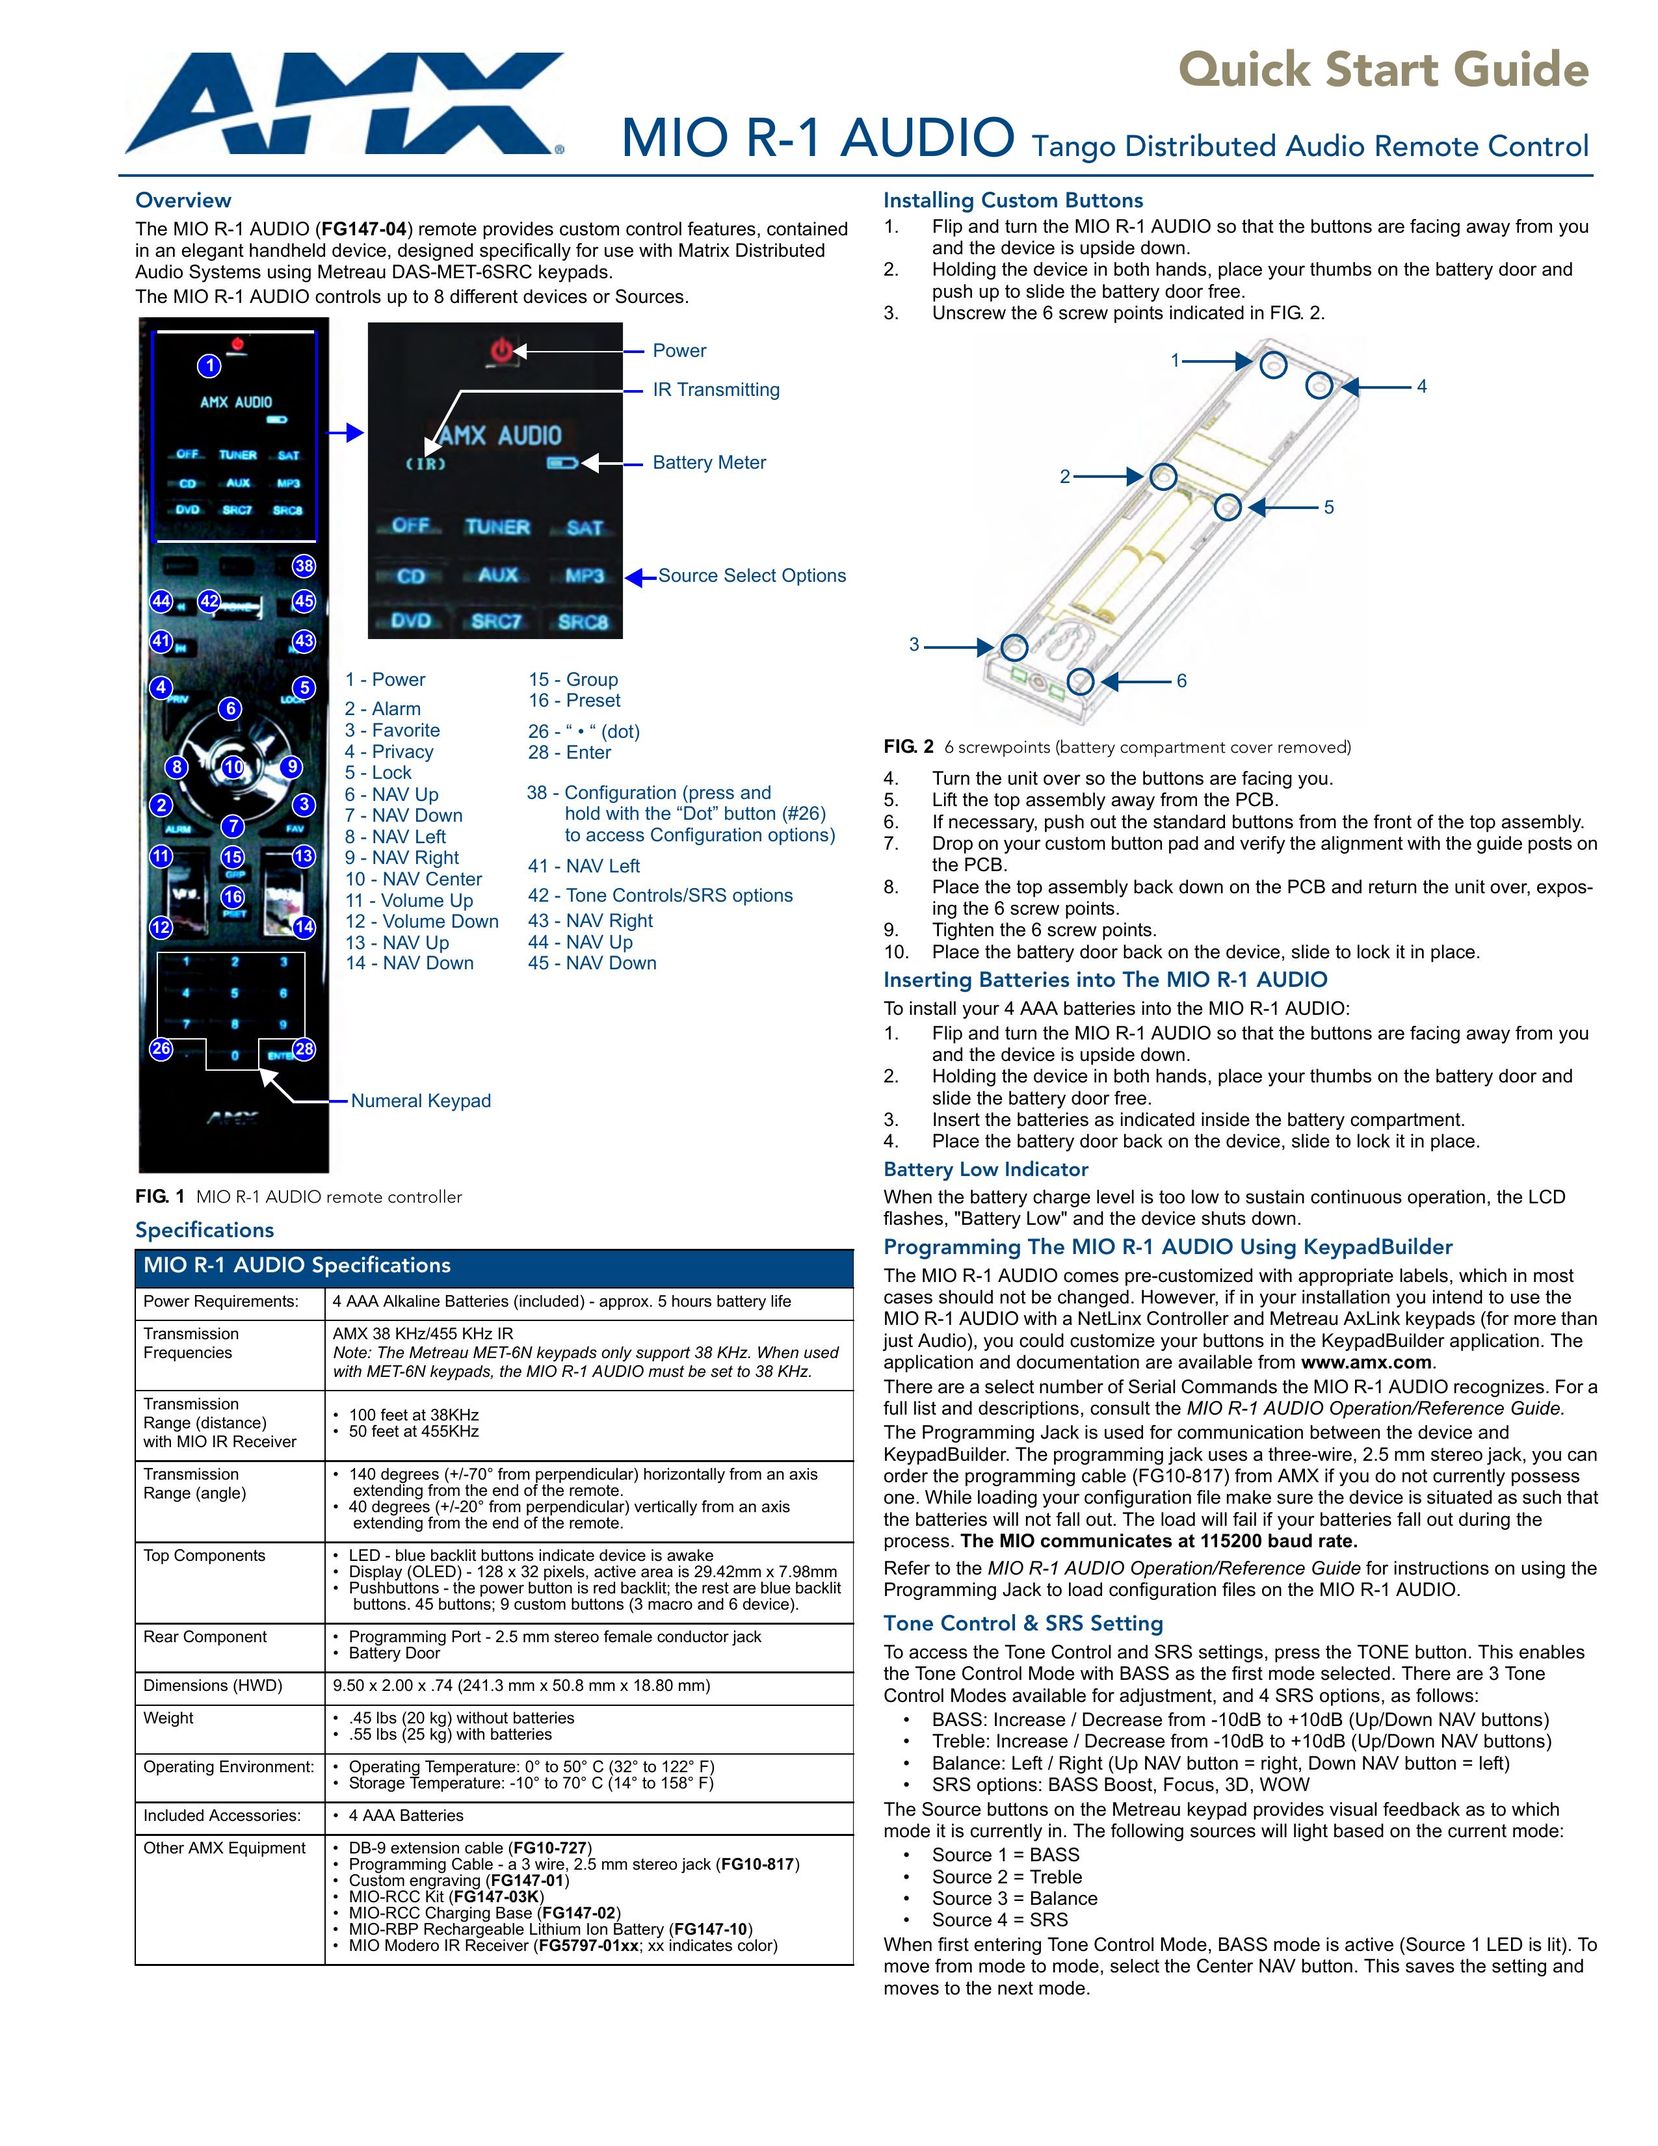 AMX MIO-R1-AUDIO Universal Remote User Manual